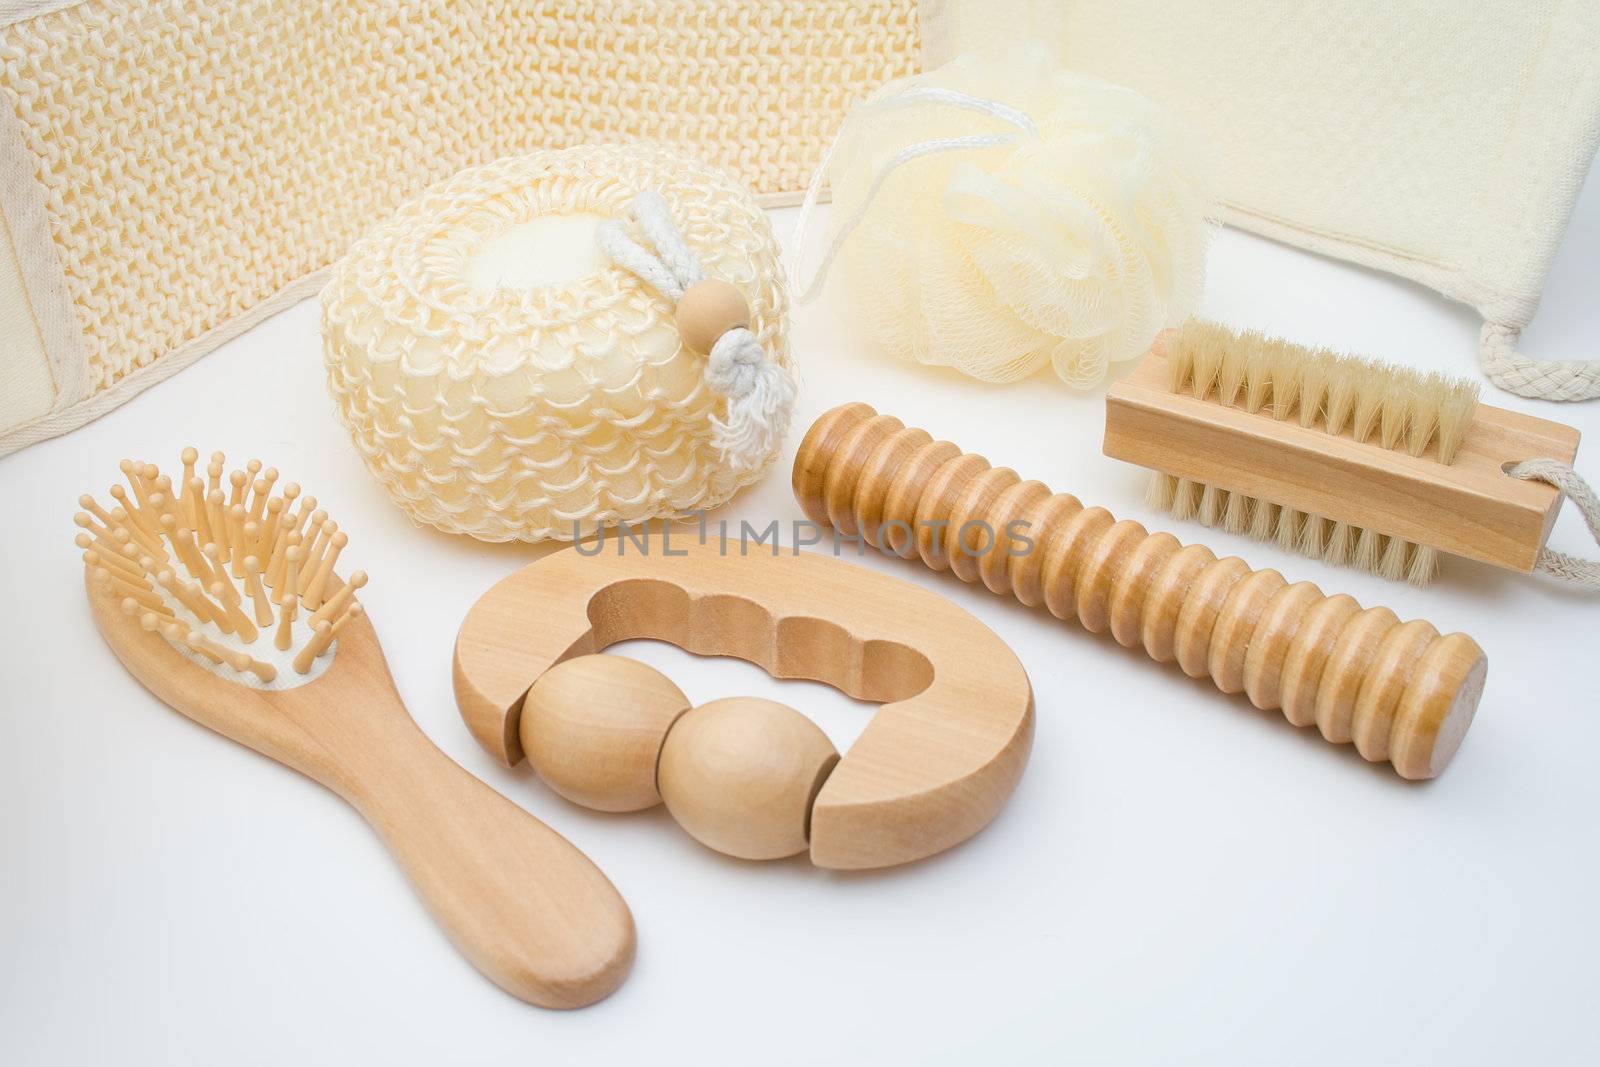 Bath set - sisal/cotton back massage belt, massage brush with wooden studs, massage roller, sponge, loofah, nylon tuff.